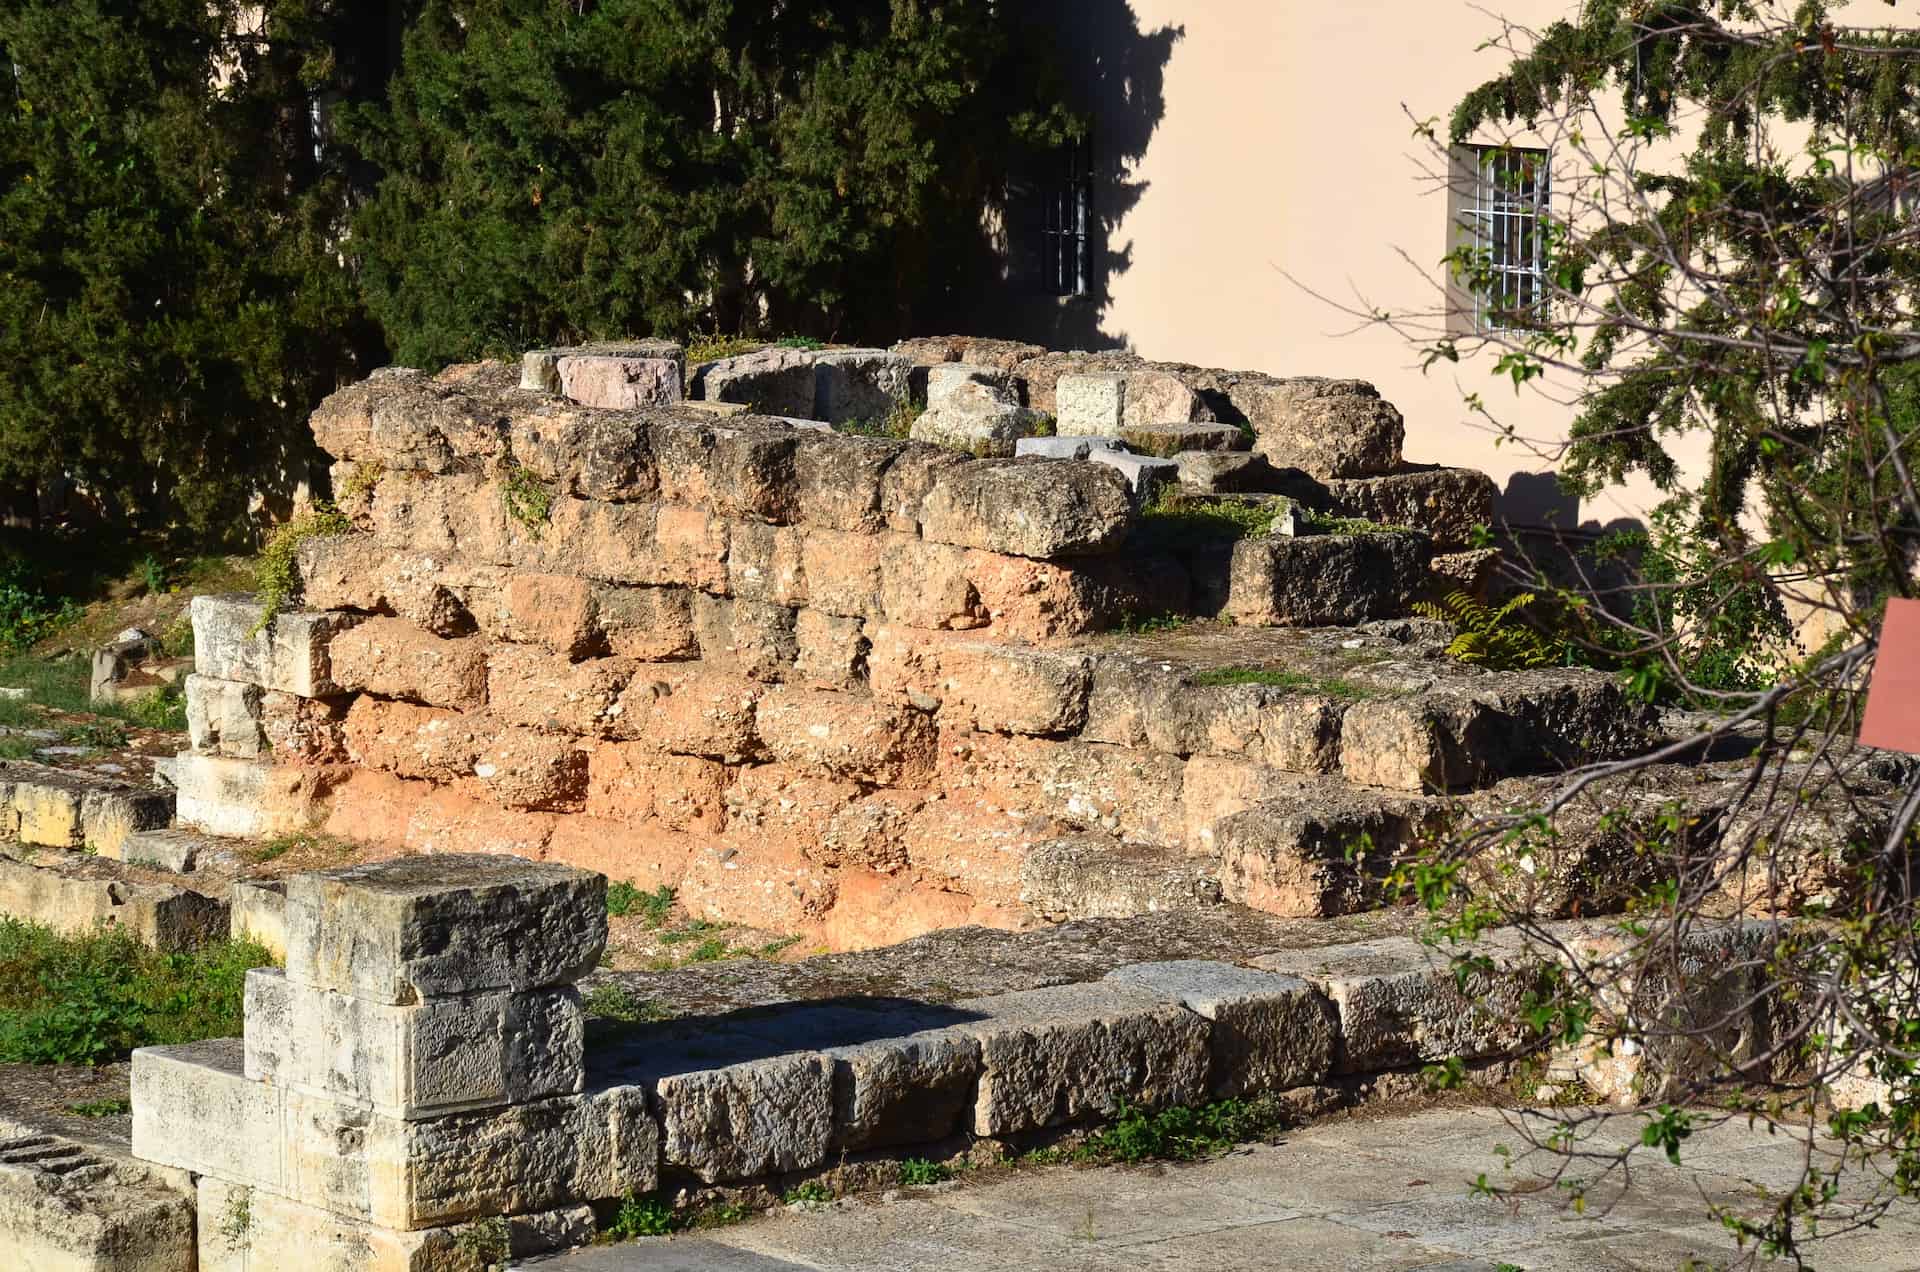 Southeast tower of the Dipylon at Kerameikos Archaeological Site, Athens, Greece